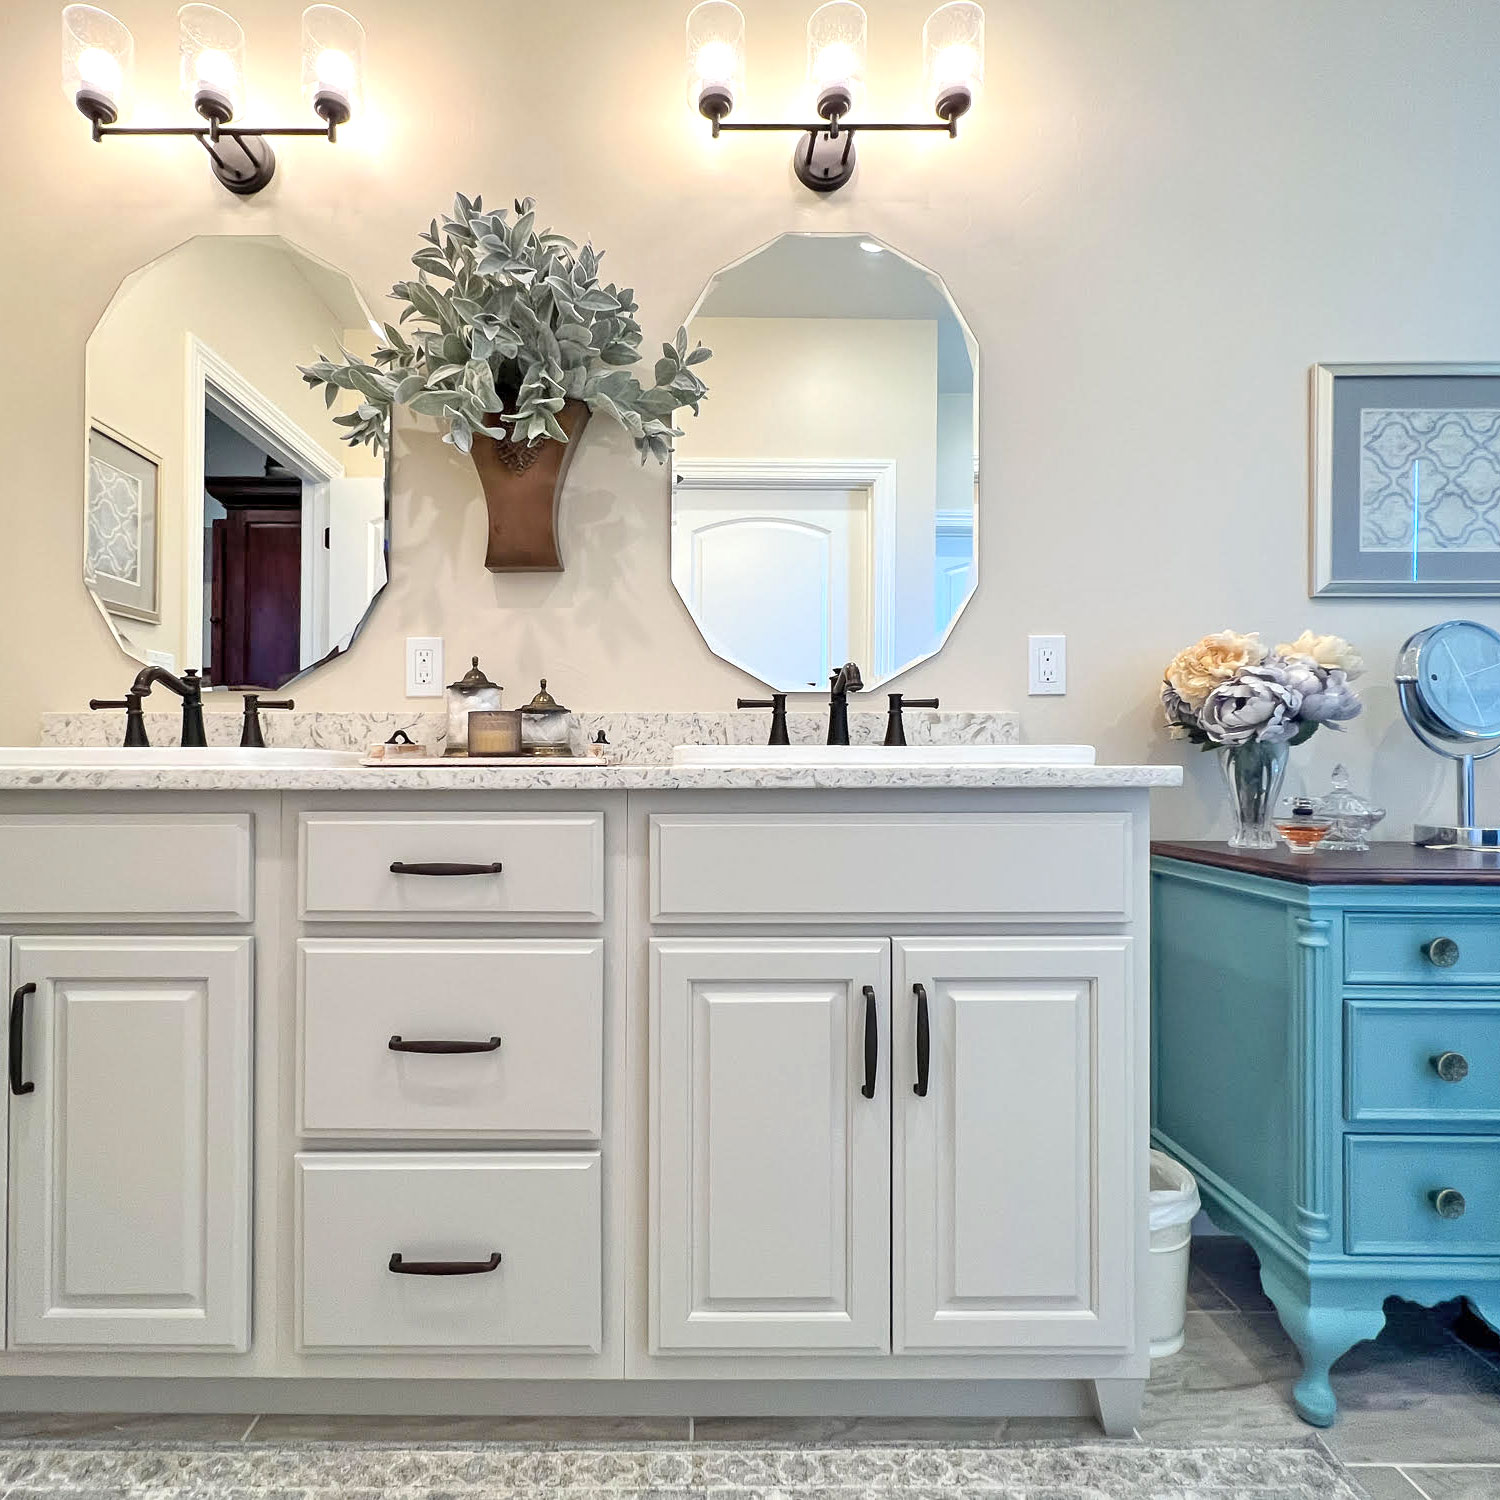 kitchens and bathrooms, interior design Sheridan wyoming